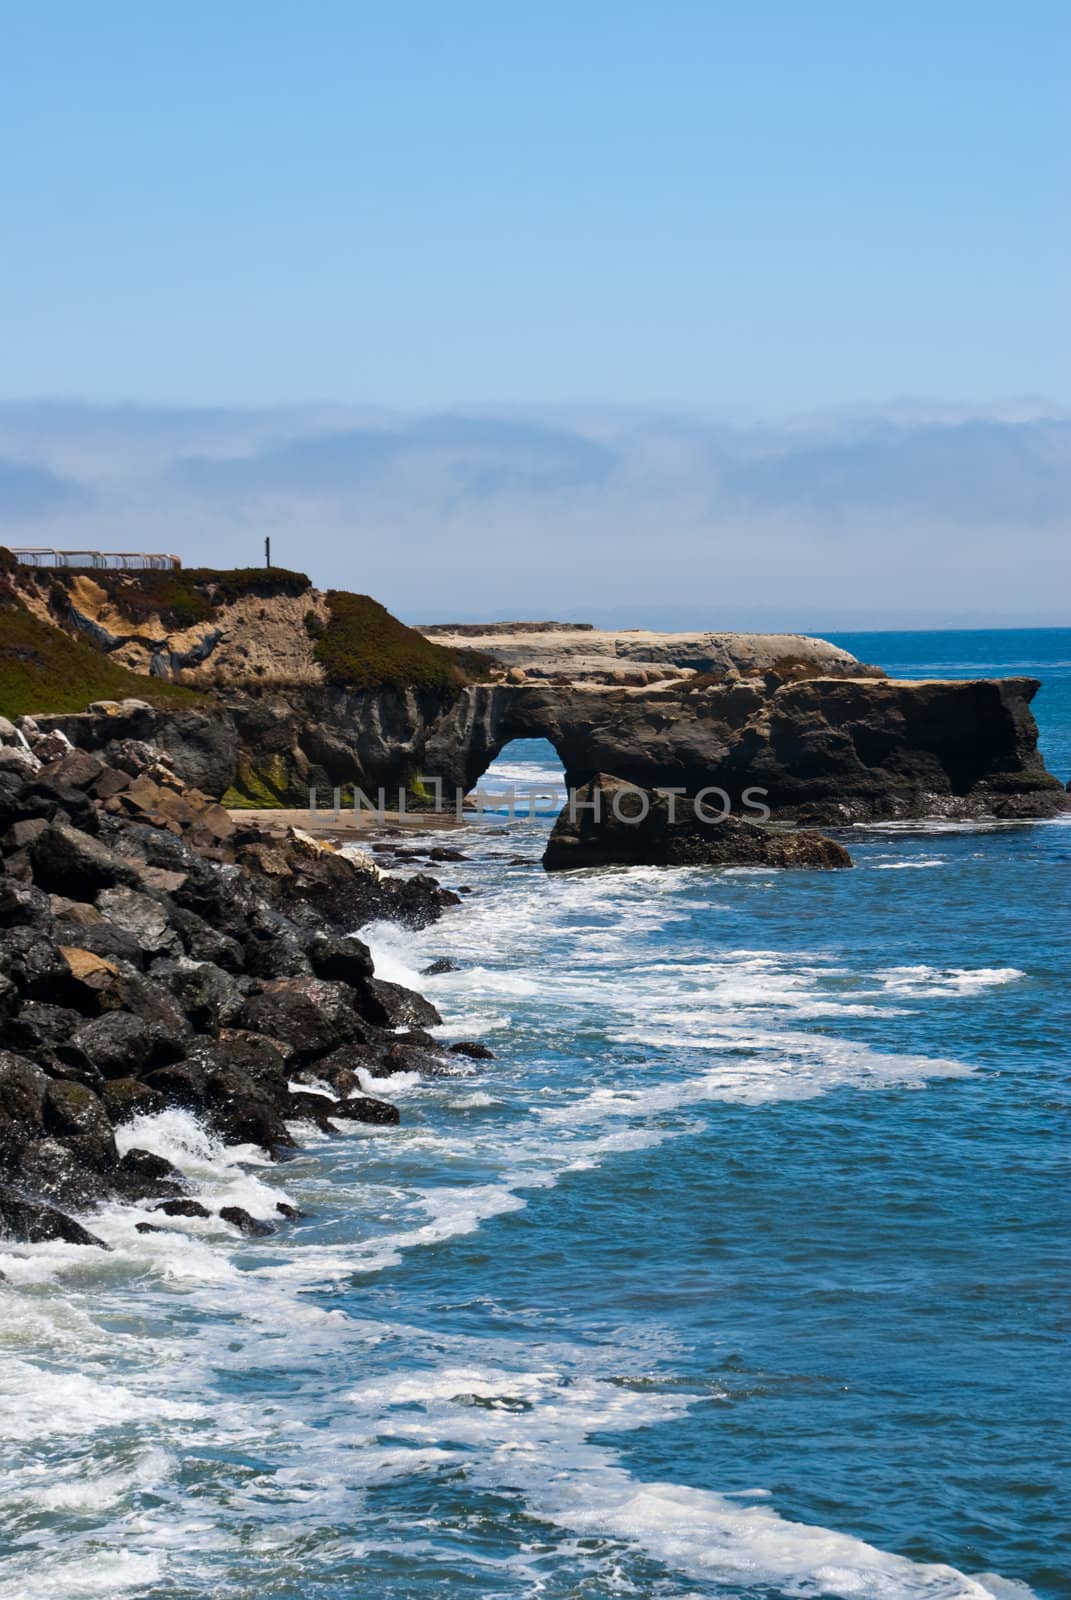 Arched Rock on California coastline